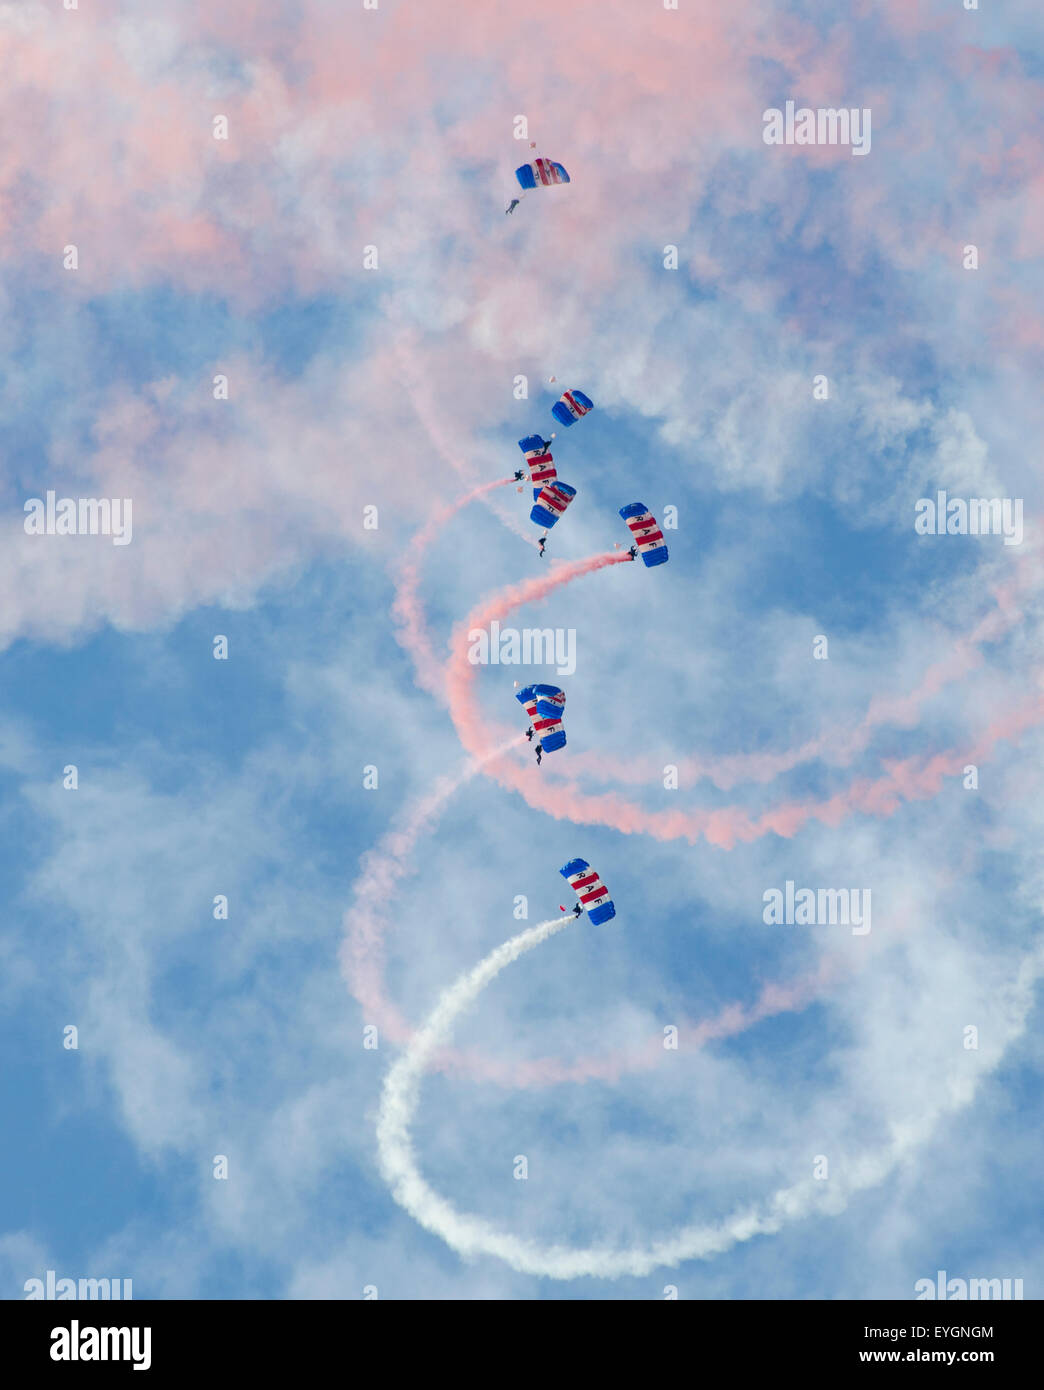 RAF Falcons Parachute Display Team at Sunderland Airshow 2015 Stock Photo